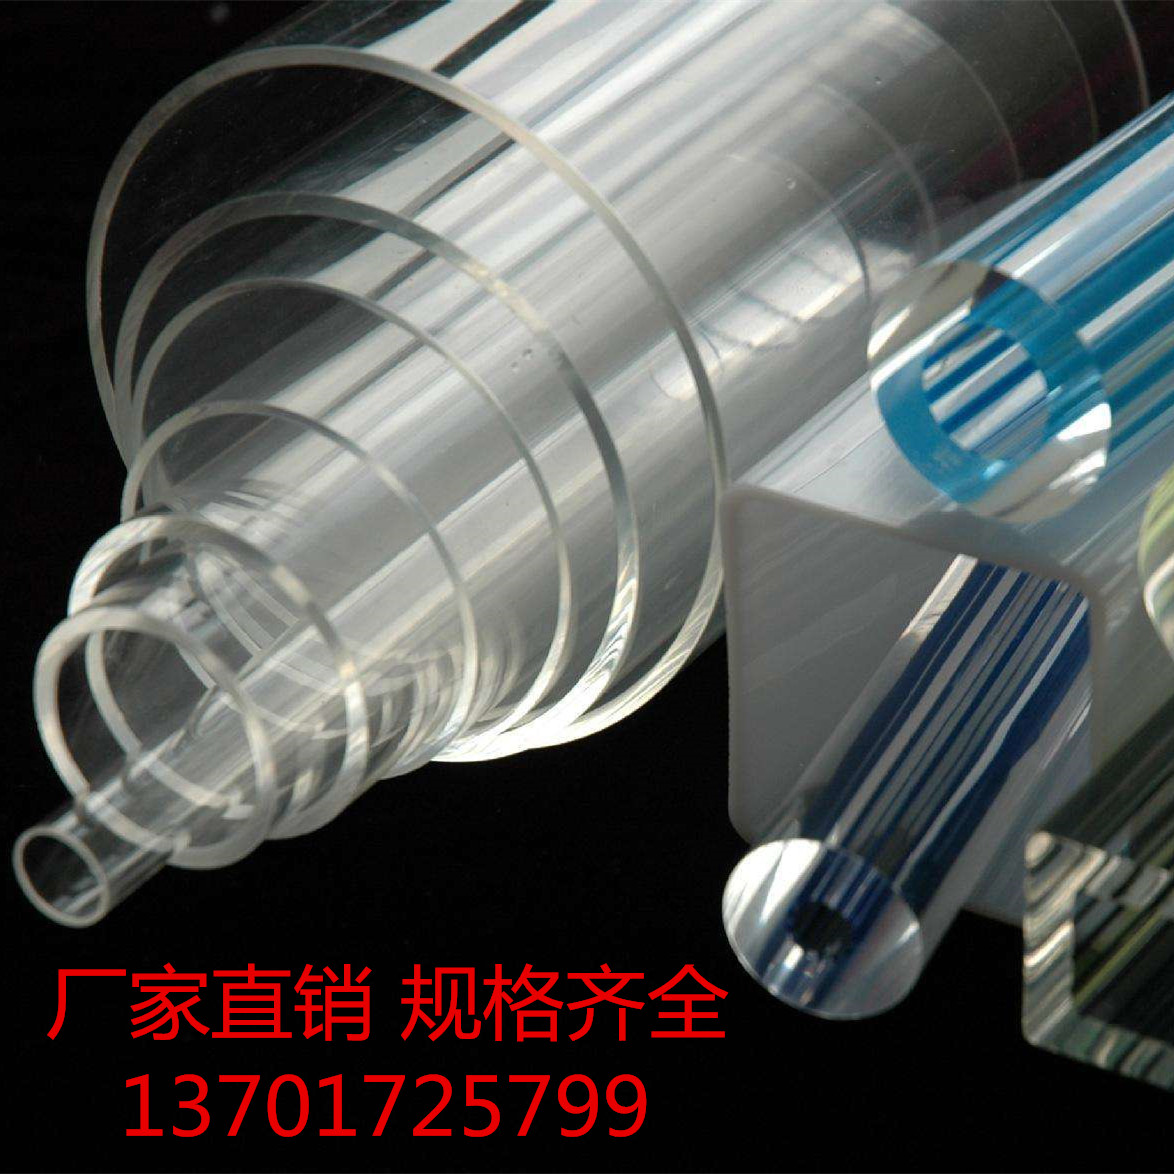 Acrylic tube hollow tube transparent cylindrical transparent plexiglass round tube hollow tube Rod color tube light guide column